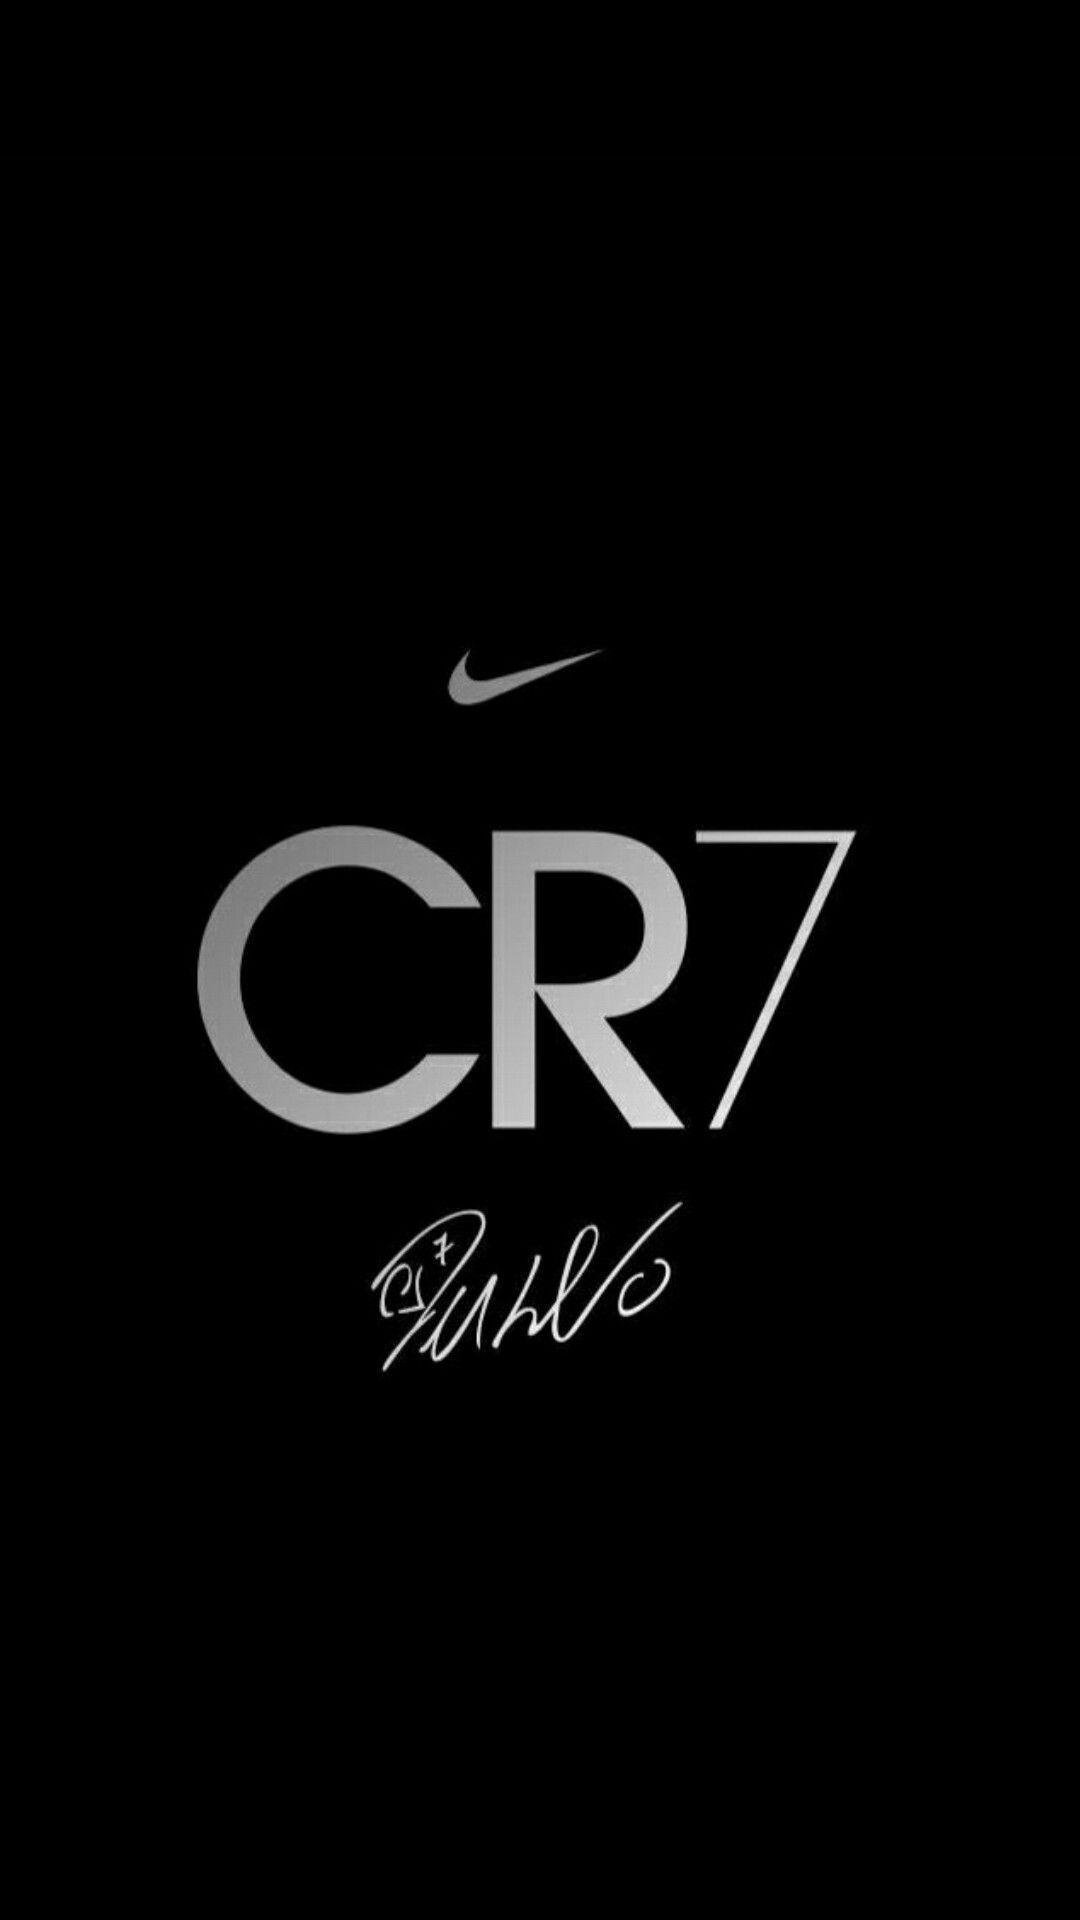 Wall Sticker Cristiano Ronaldo Vinyl Wallpaper Soccer Sport CR7 Removable  Decal | eBay